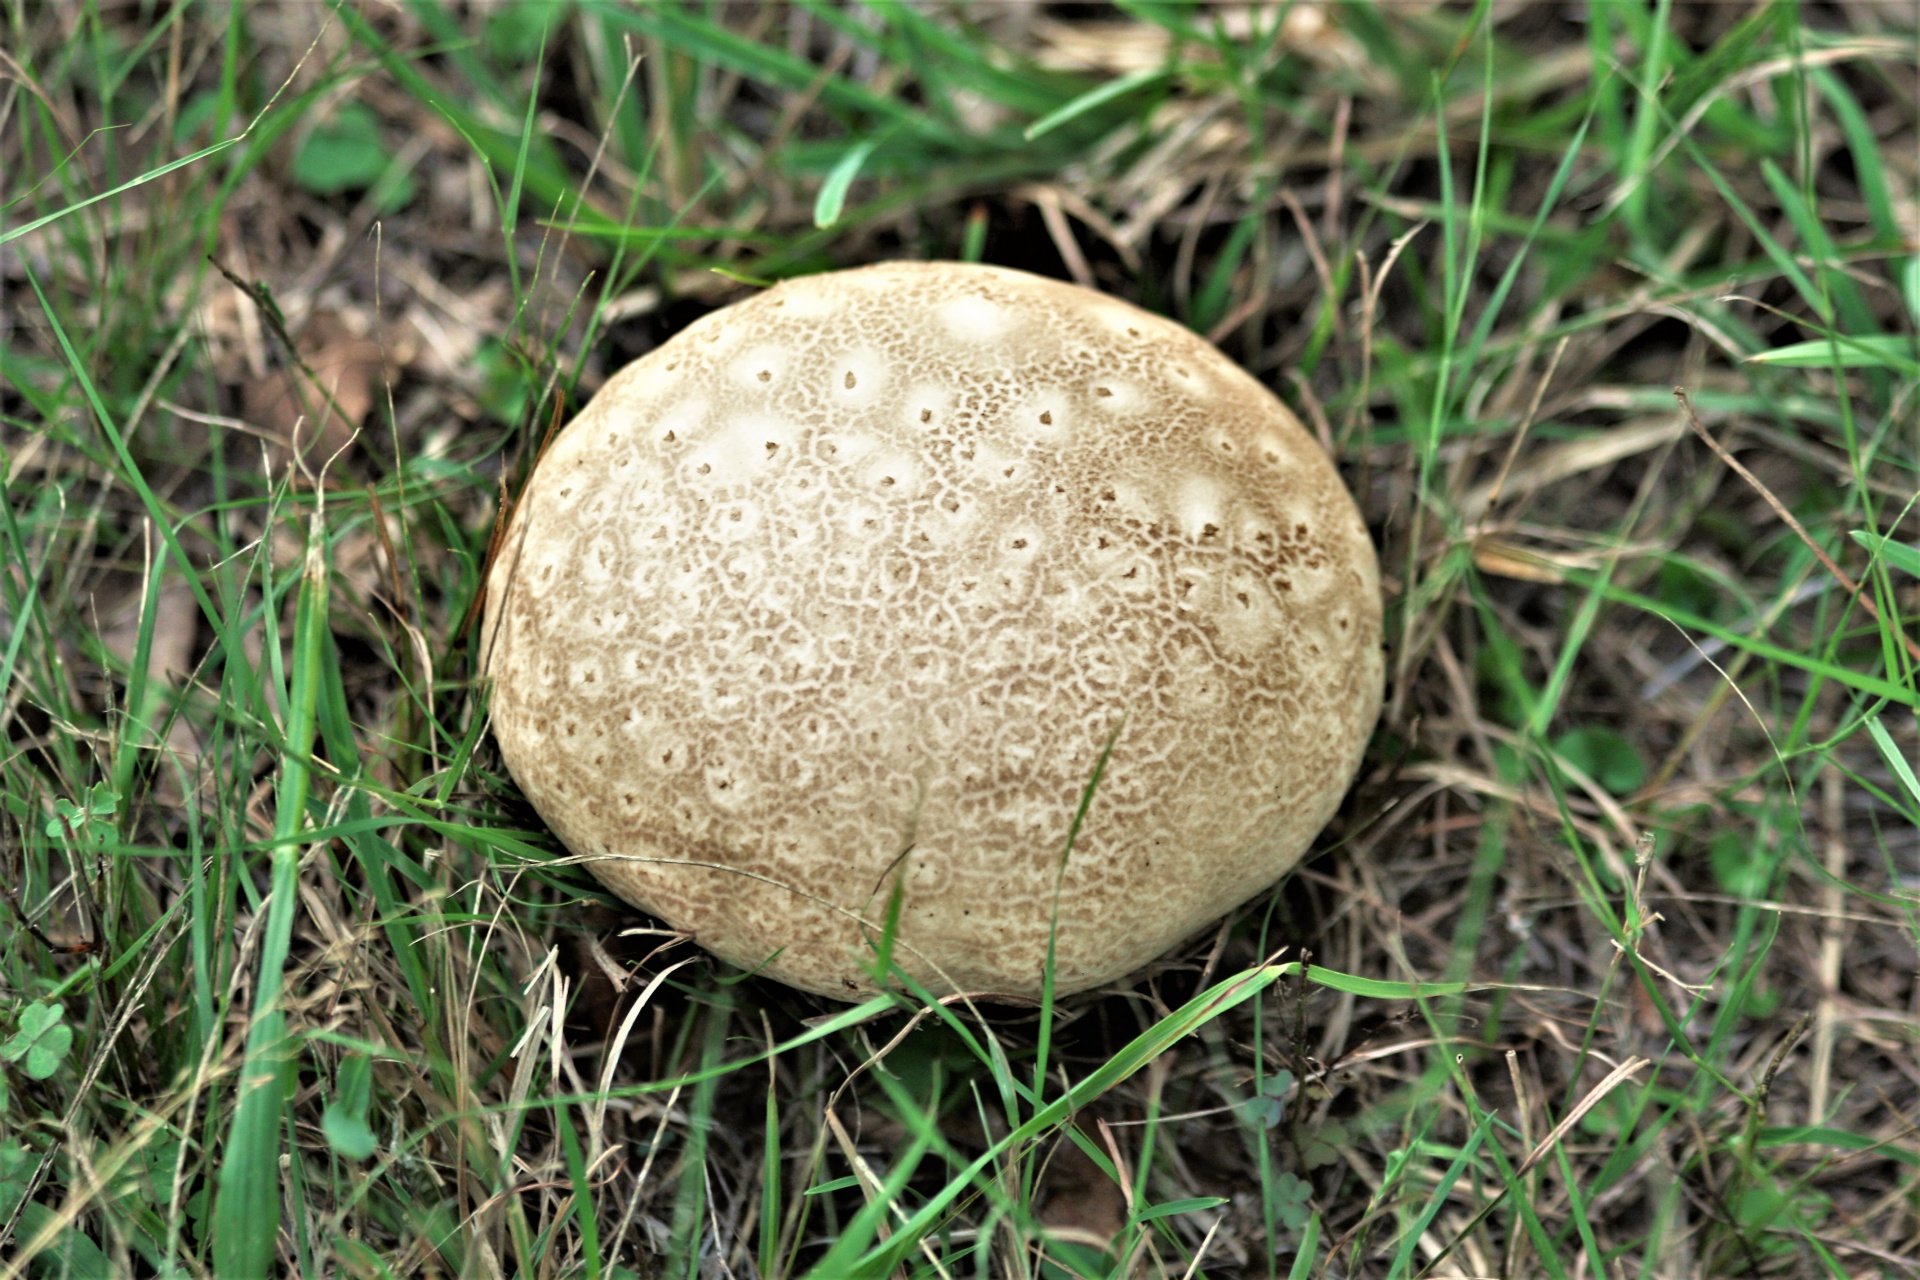 Close-up of a light brown puffball mushroom, growing in tall green grass.